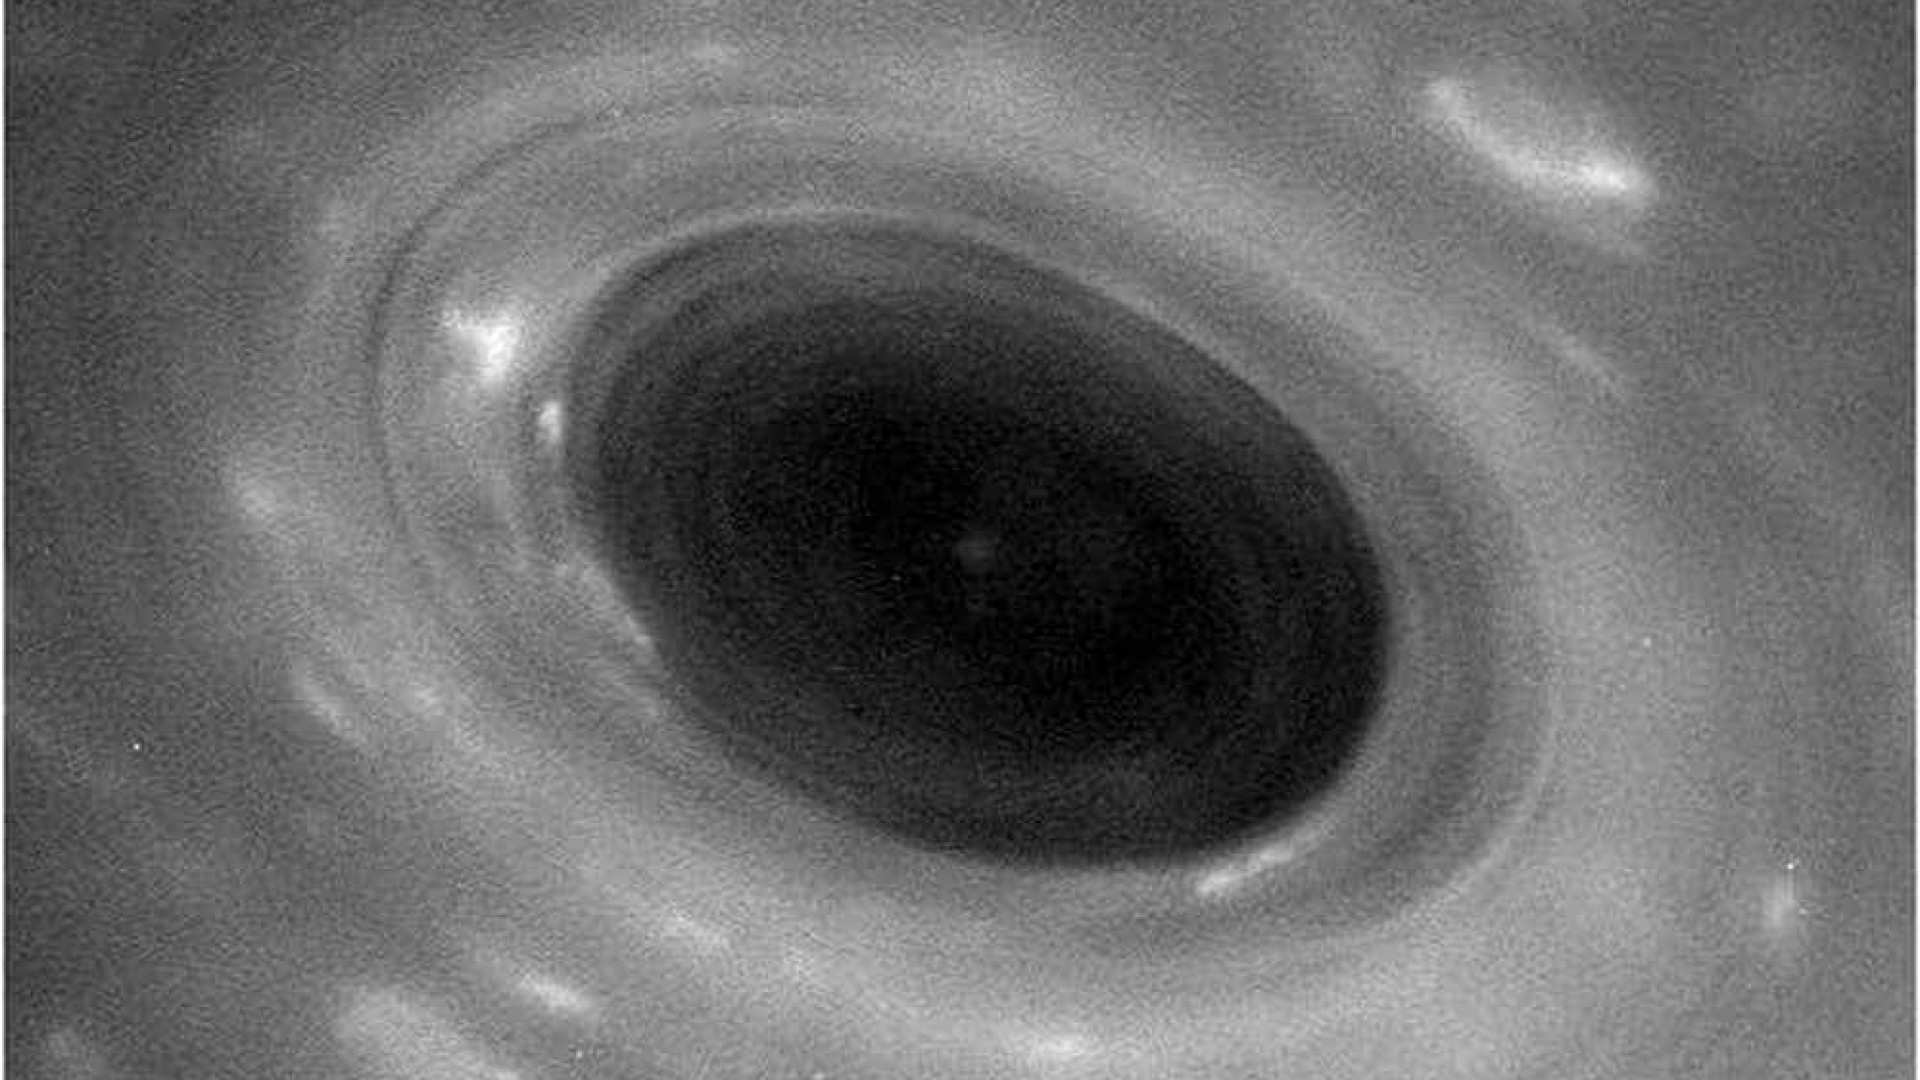 Sonda espacial Cassini capta sombra enorme 
nos anéis de Saturno